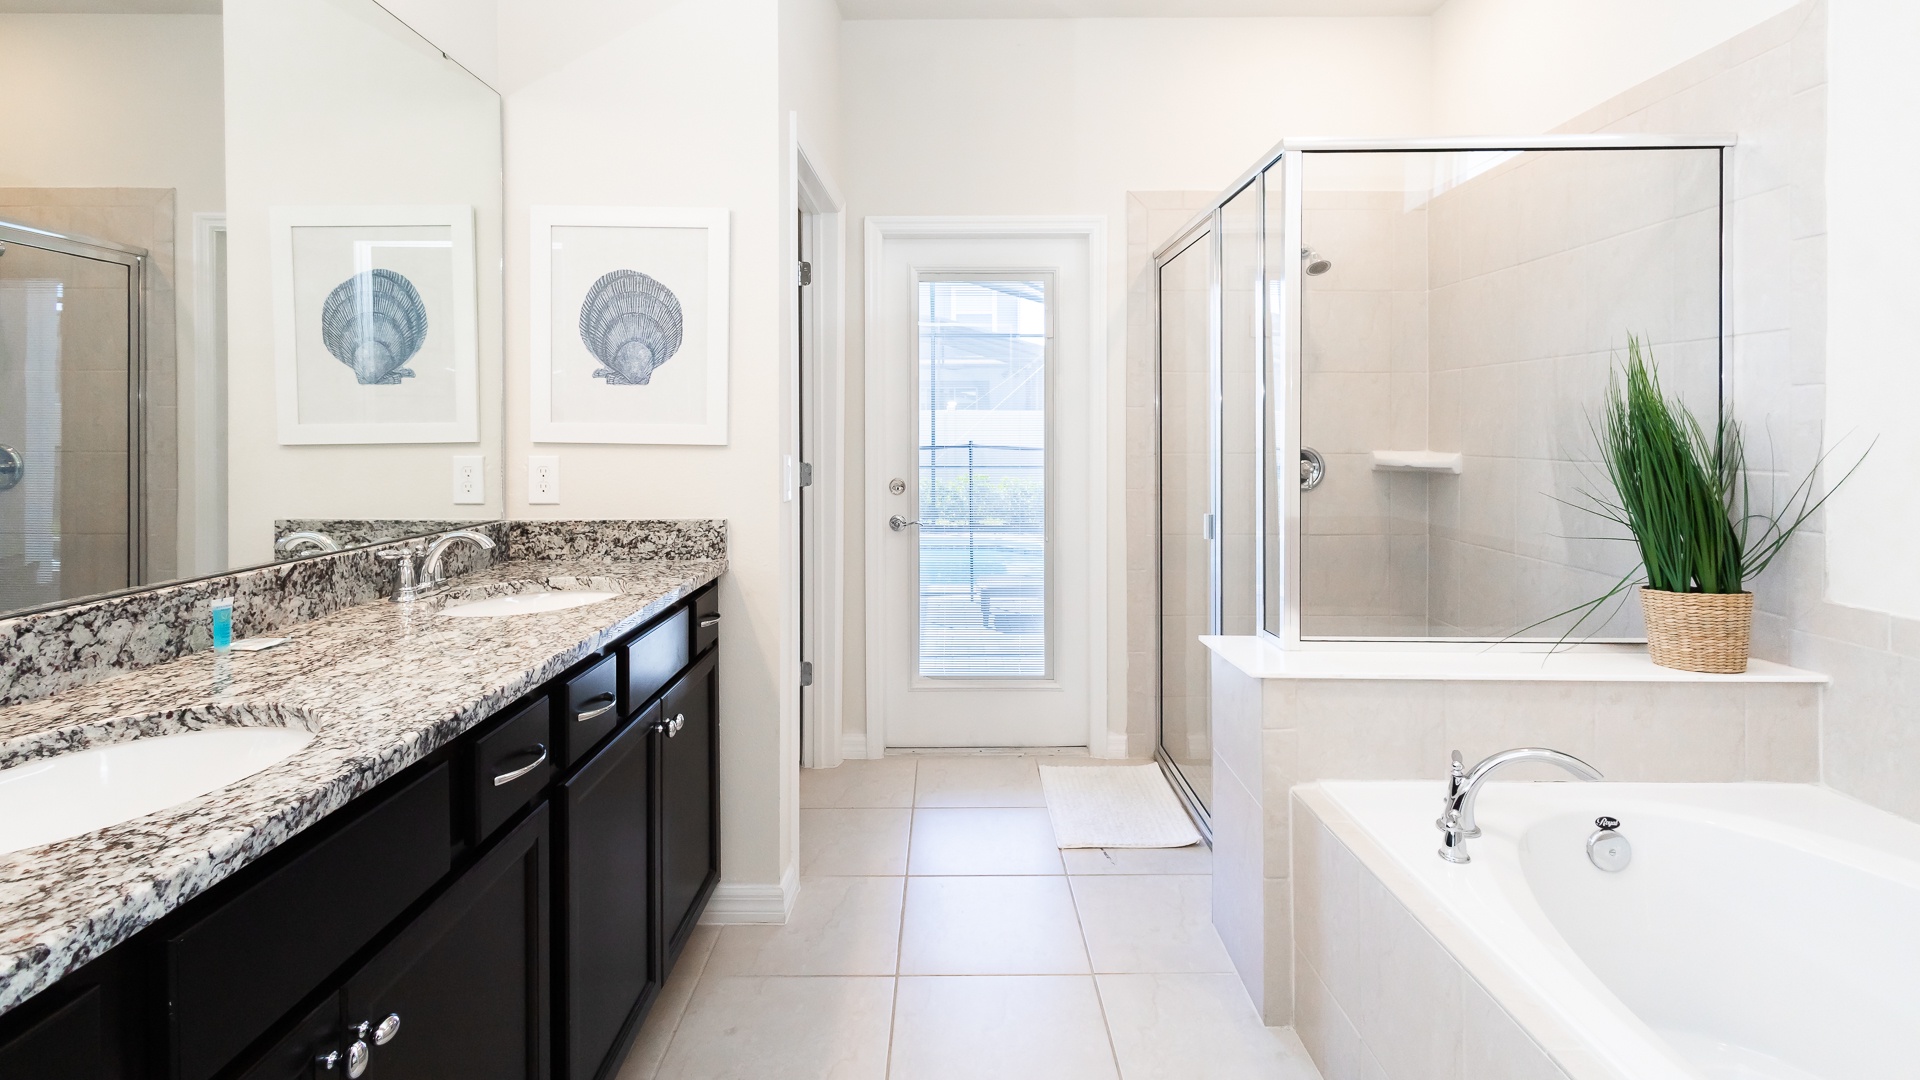 The 1st floor king en suite includes a dual vanity, glass shower, & soaking tub